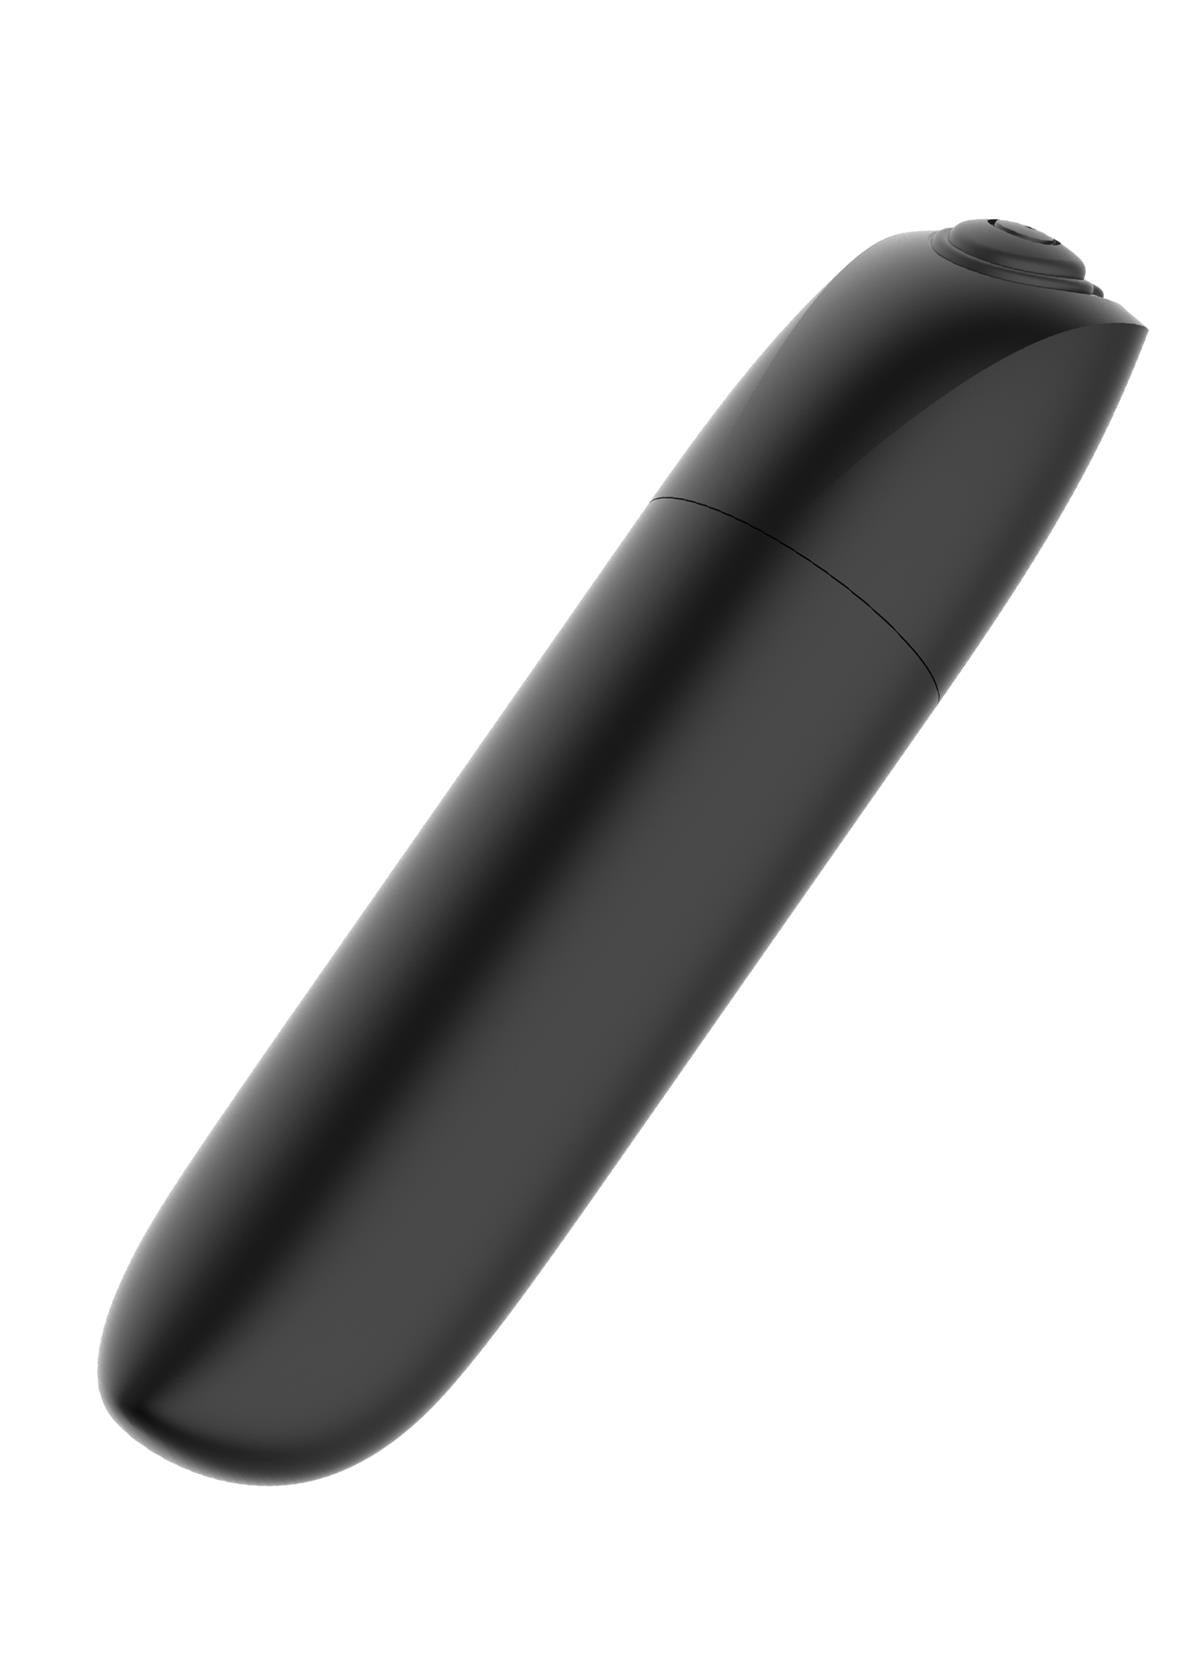 Bossoftoys - 22-00046 - Powerful Bullet Vibrator - USB rechargeable - 20 Functions - shiny Black